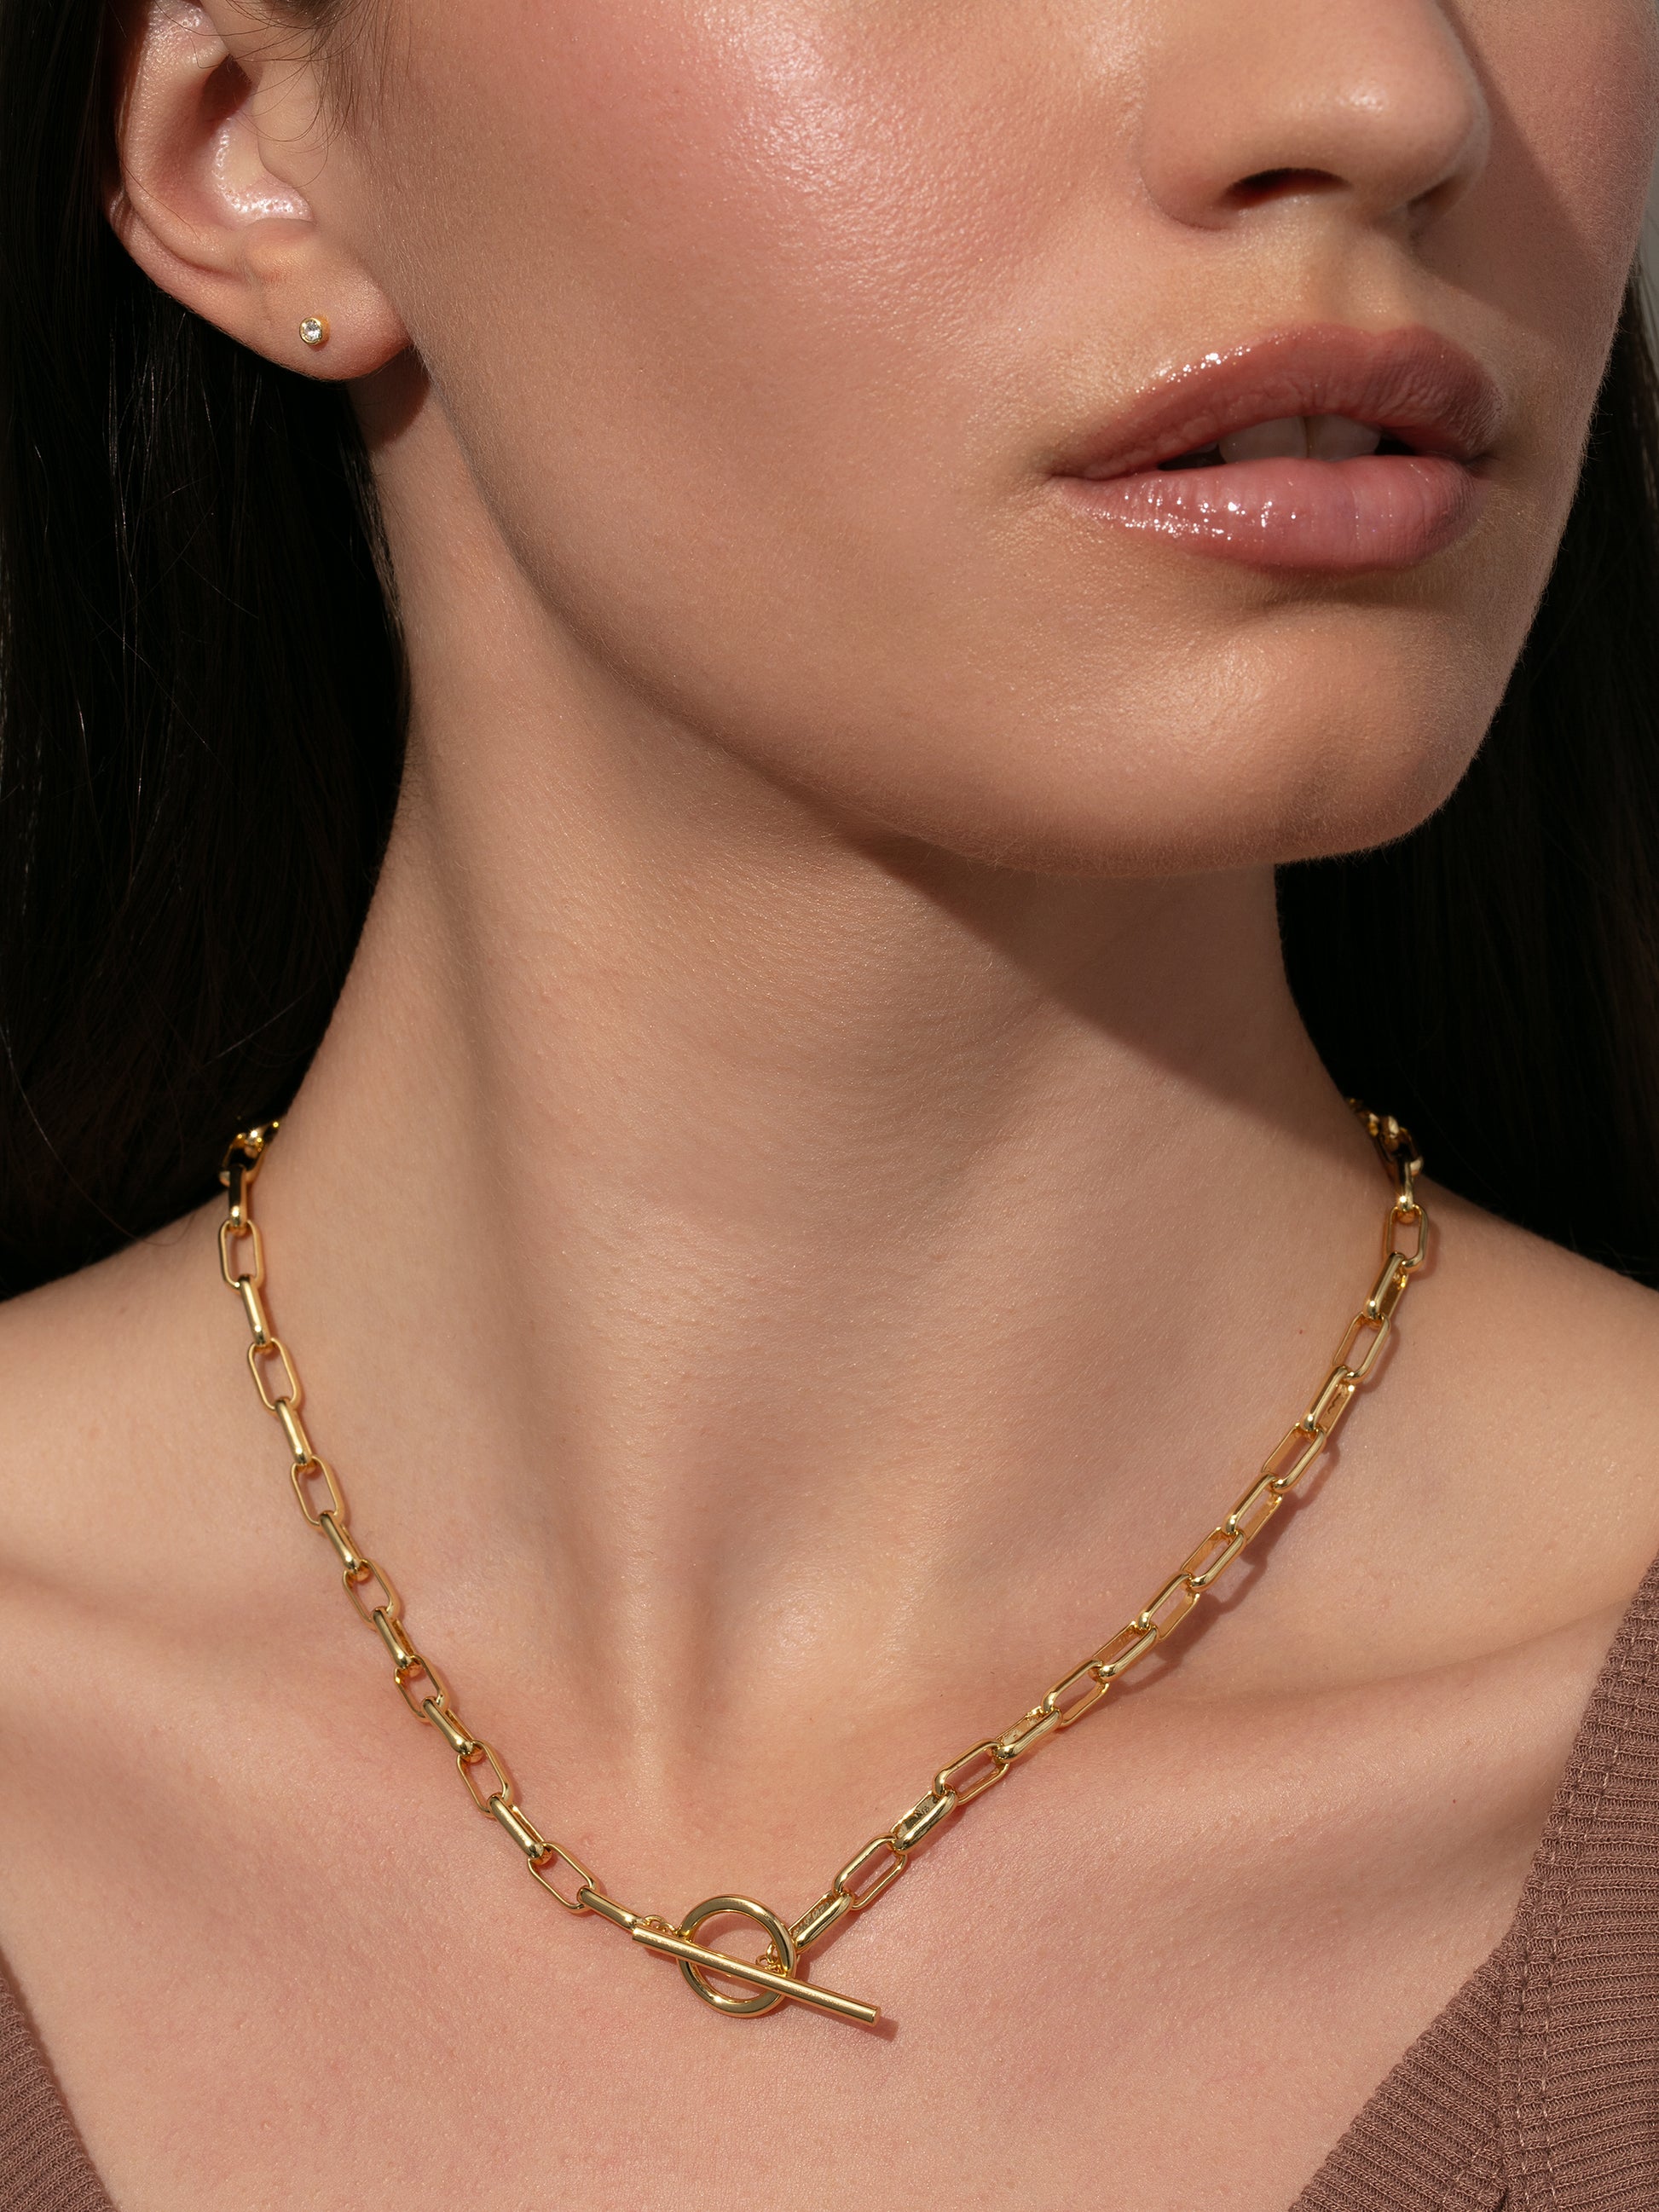 Staple Chain Necklace | Gold | Model Image | Uncommon James